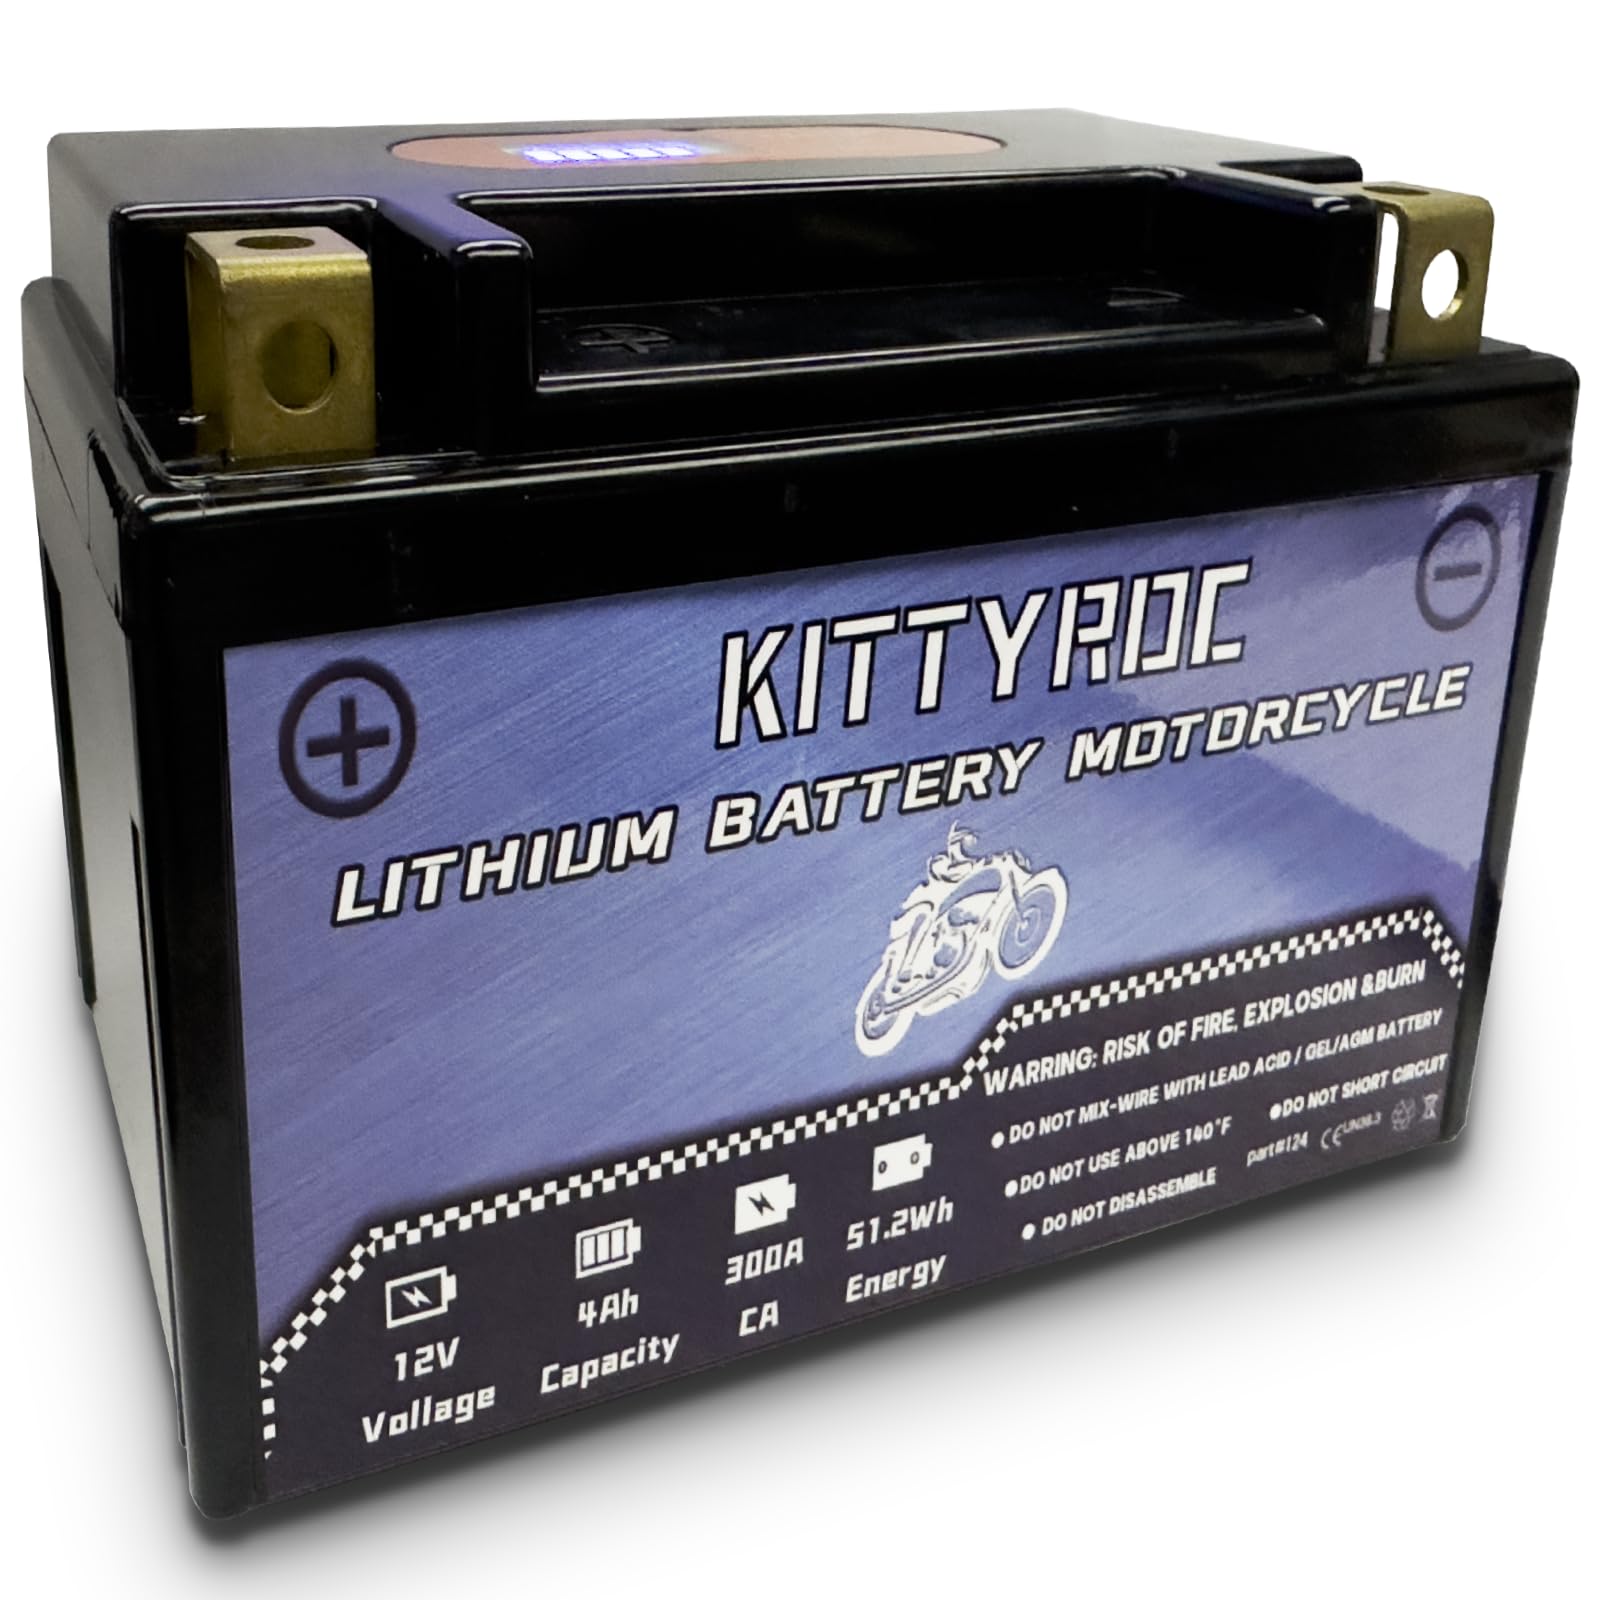 KITTYROC 12V Lithium Motorrad Batterie 4Ah 300A, Hohler Terminal LiFePO4 Batterie mit Smart BMS, Ersatz ATV, UTV, Motorrad, 4-Rad, Traktor, Roller, Rasenmäher, Jet Ski, Schneemobil von KITTYROC